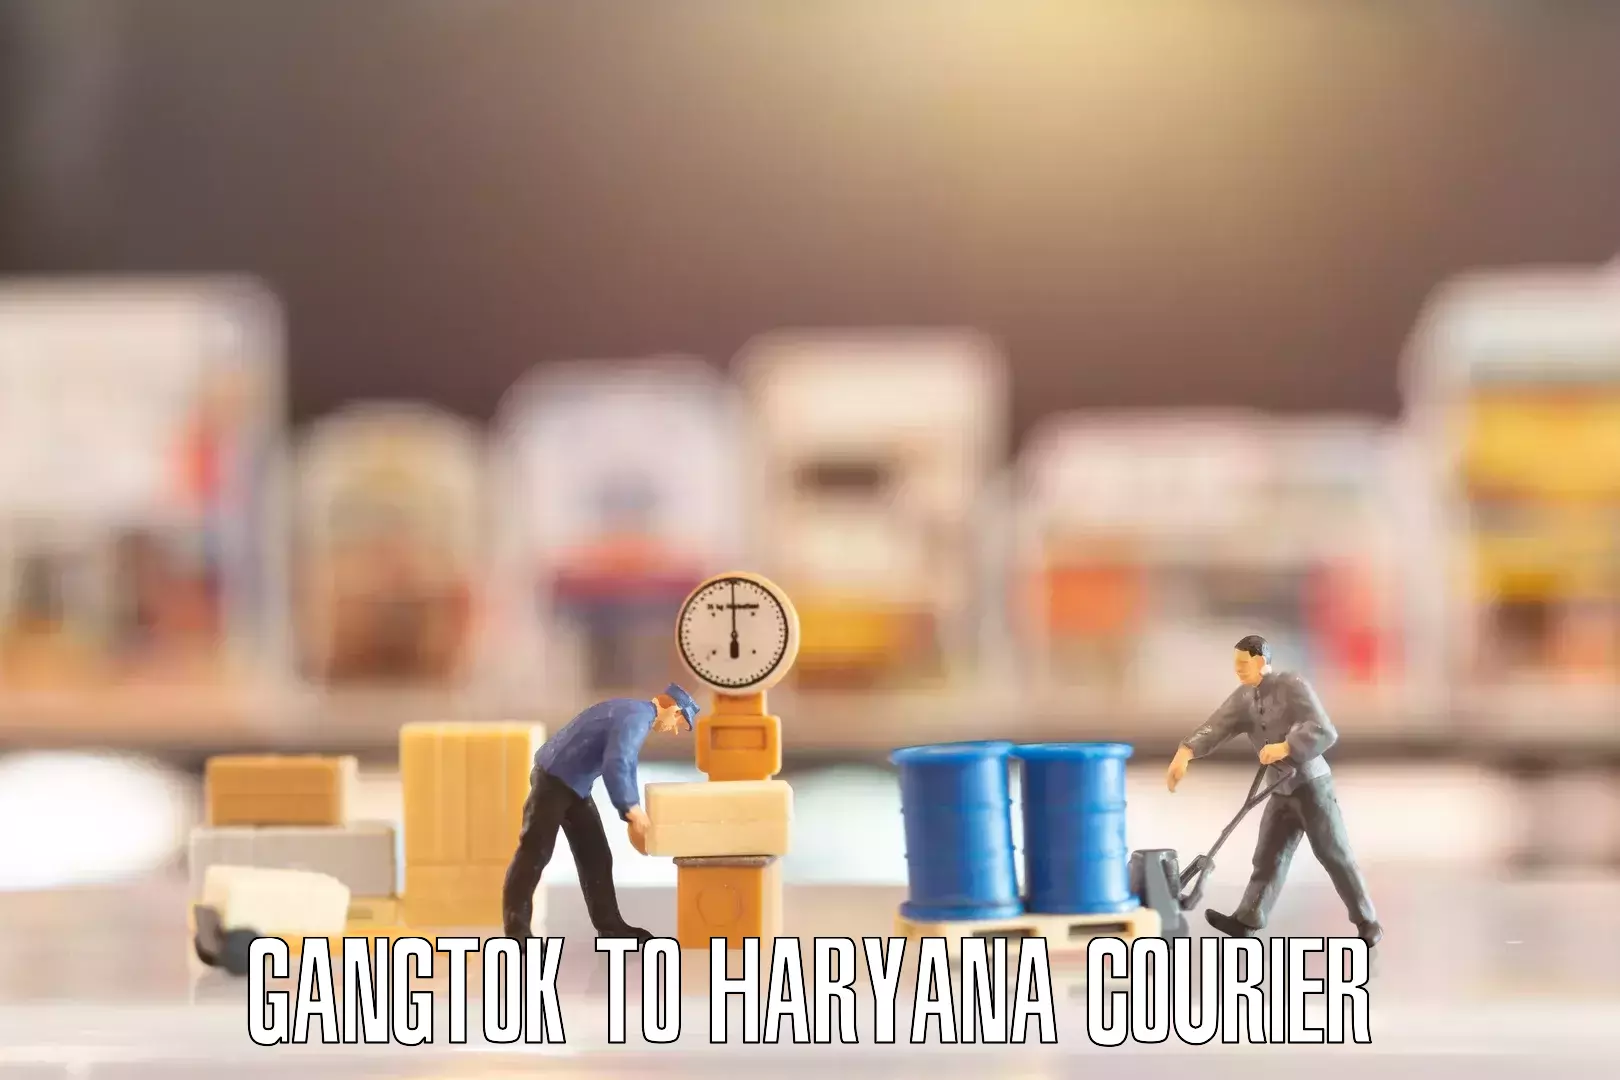 Home shifting experts Gangtok to Haryana